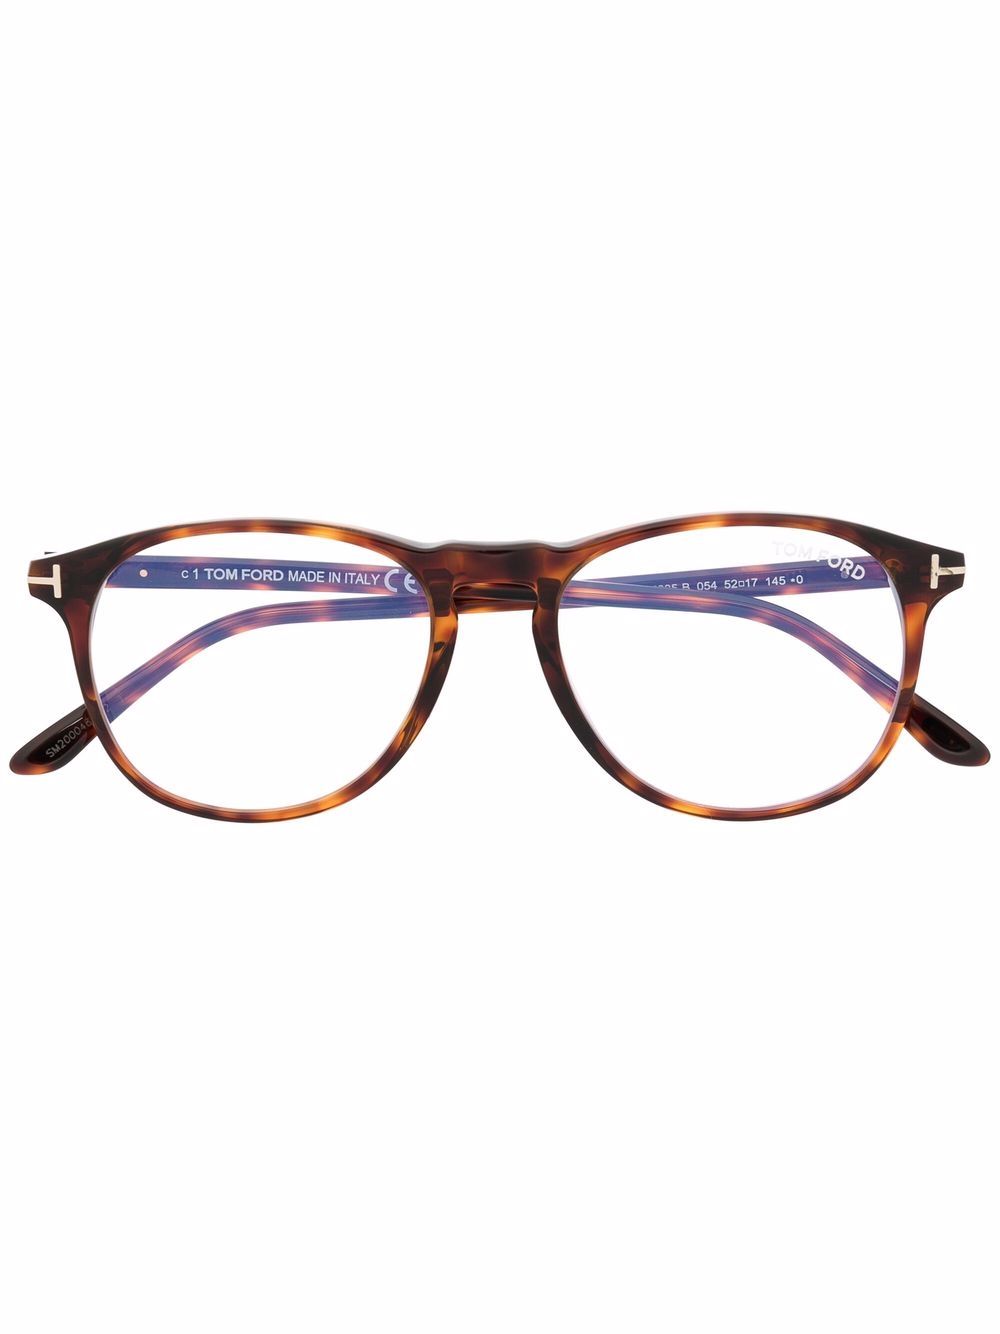 TOM FORD Eyewear tortoiseshell-frame glasses - Brown von TOM FORD Eyewear